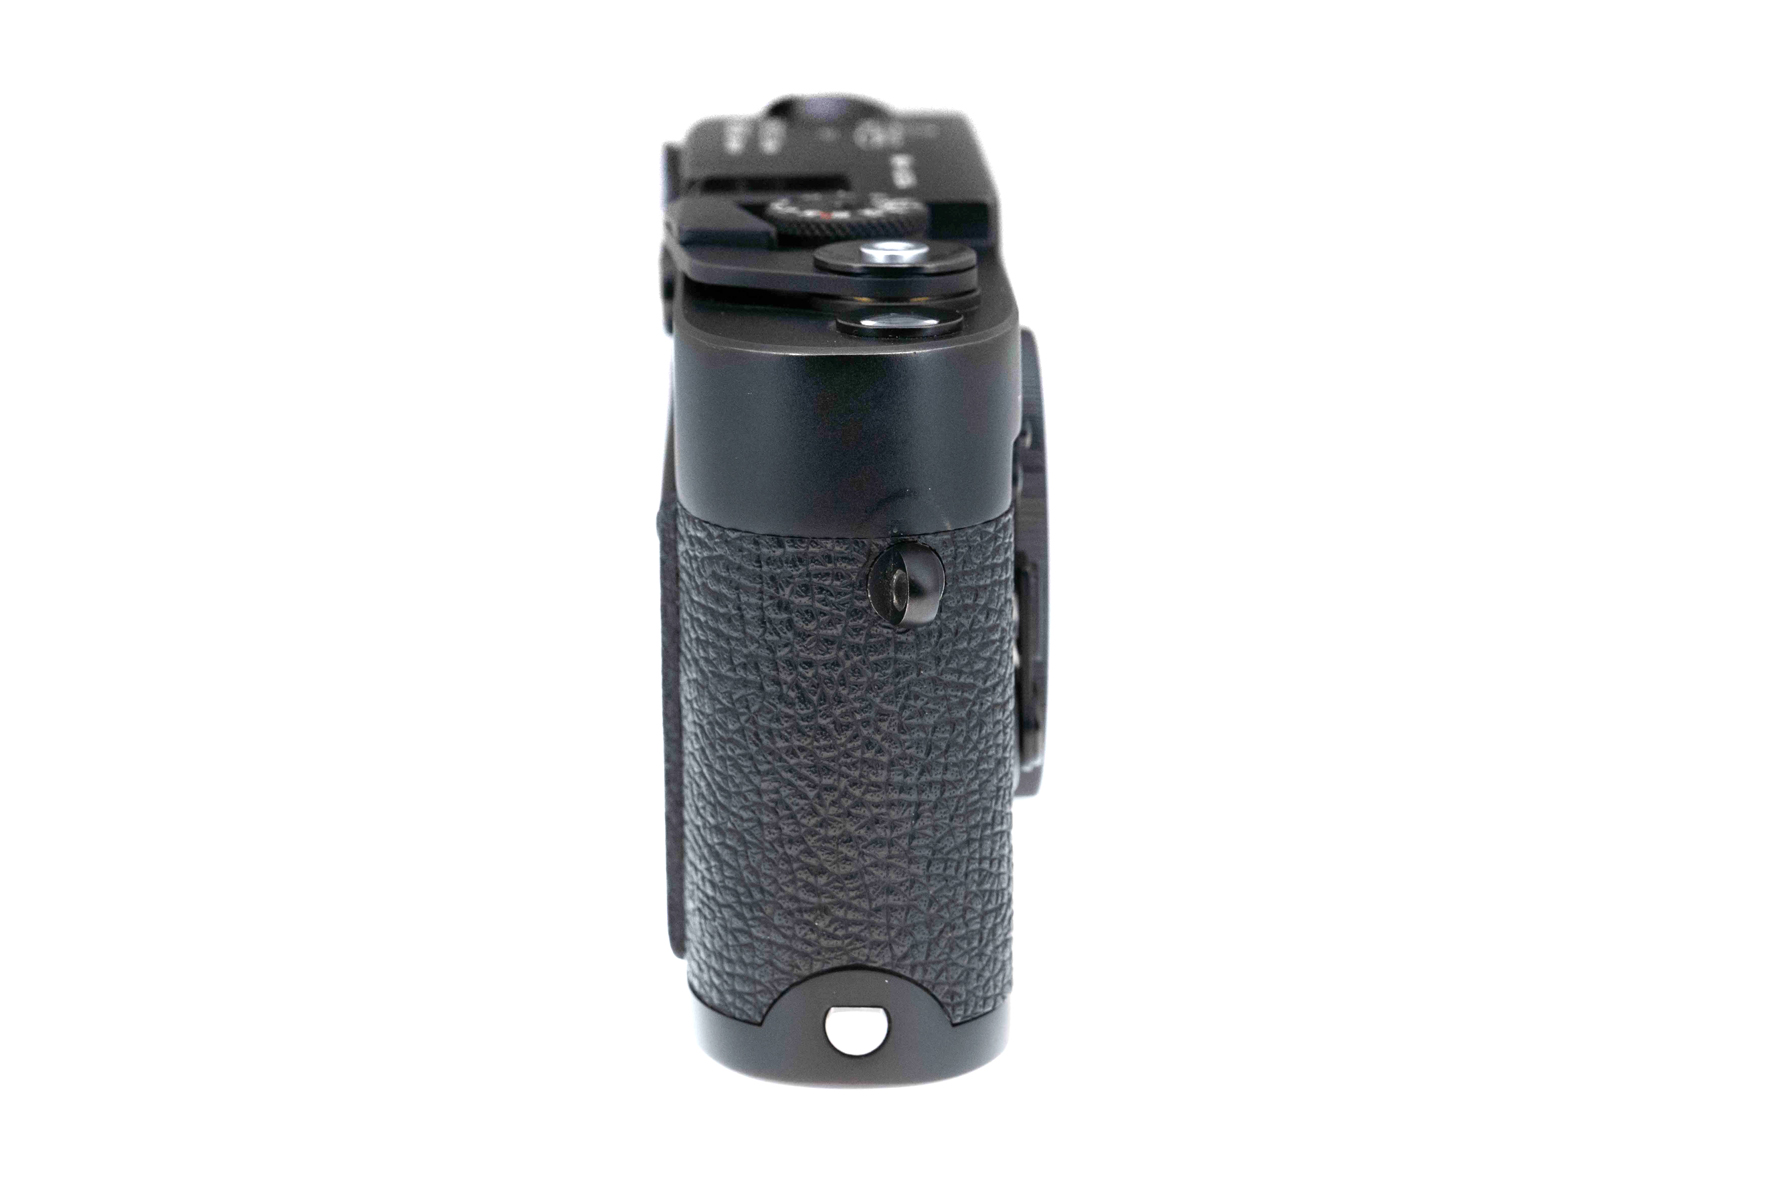 Leica M4 black chrome plated